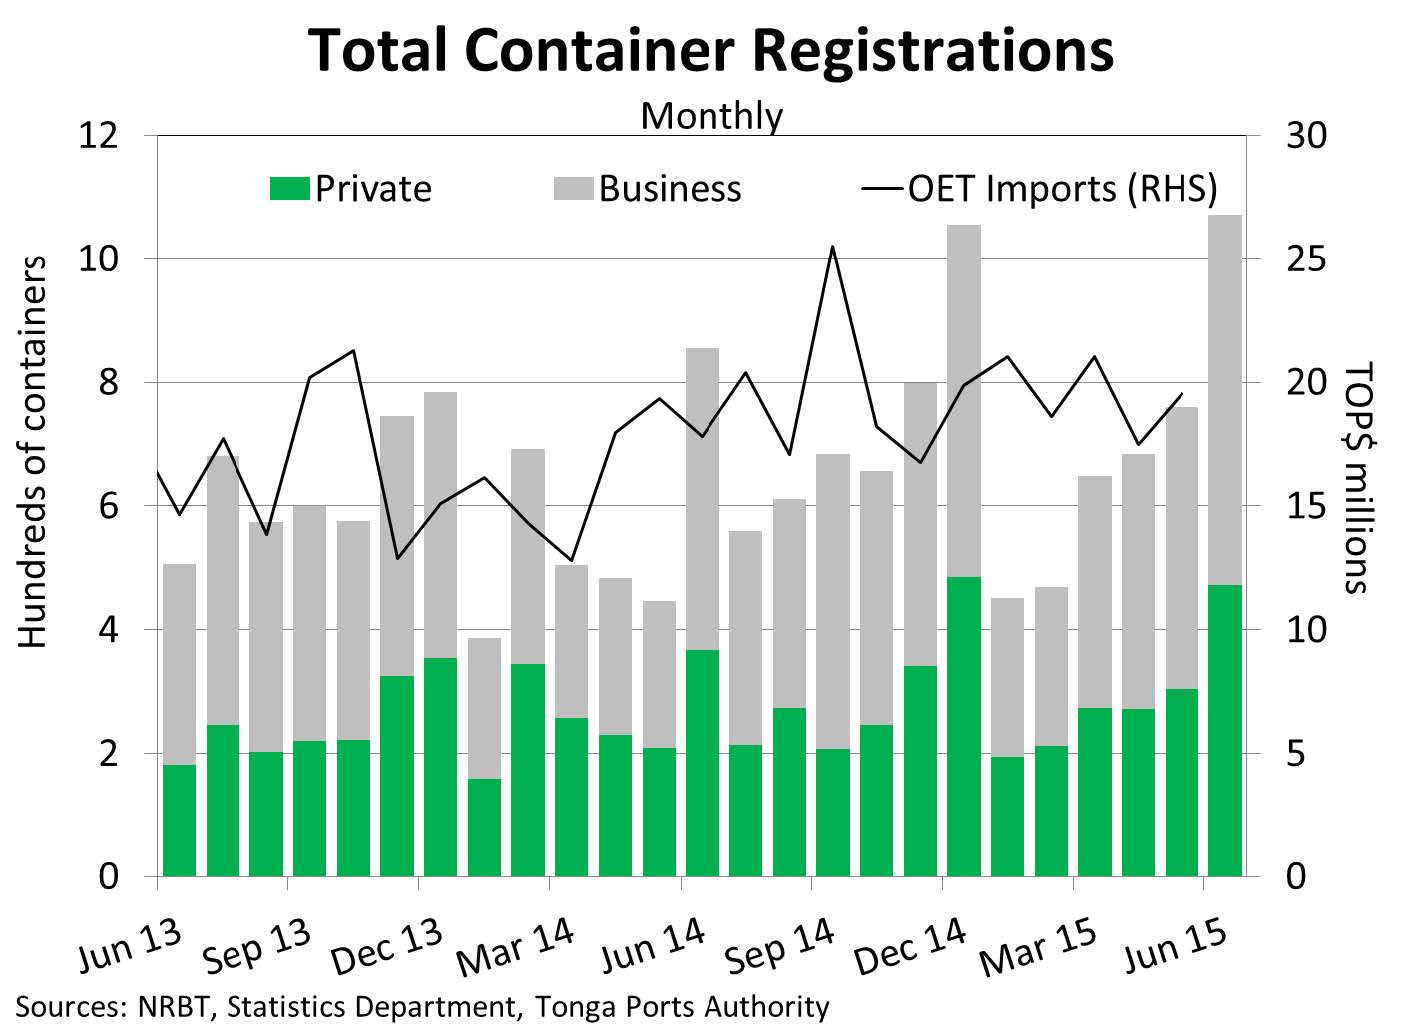 ContainerRegistration Jun15